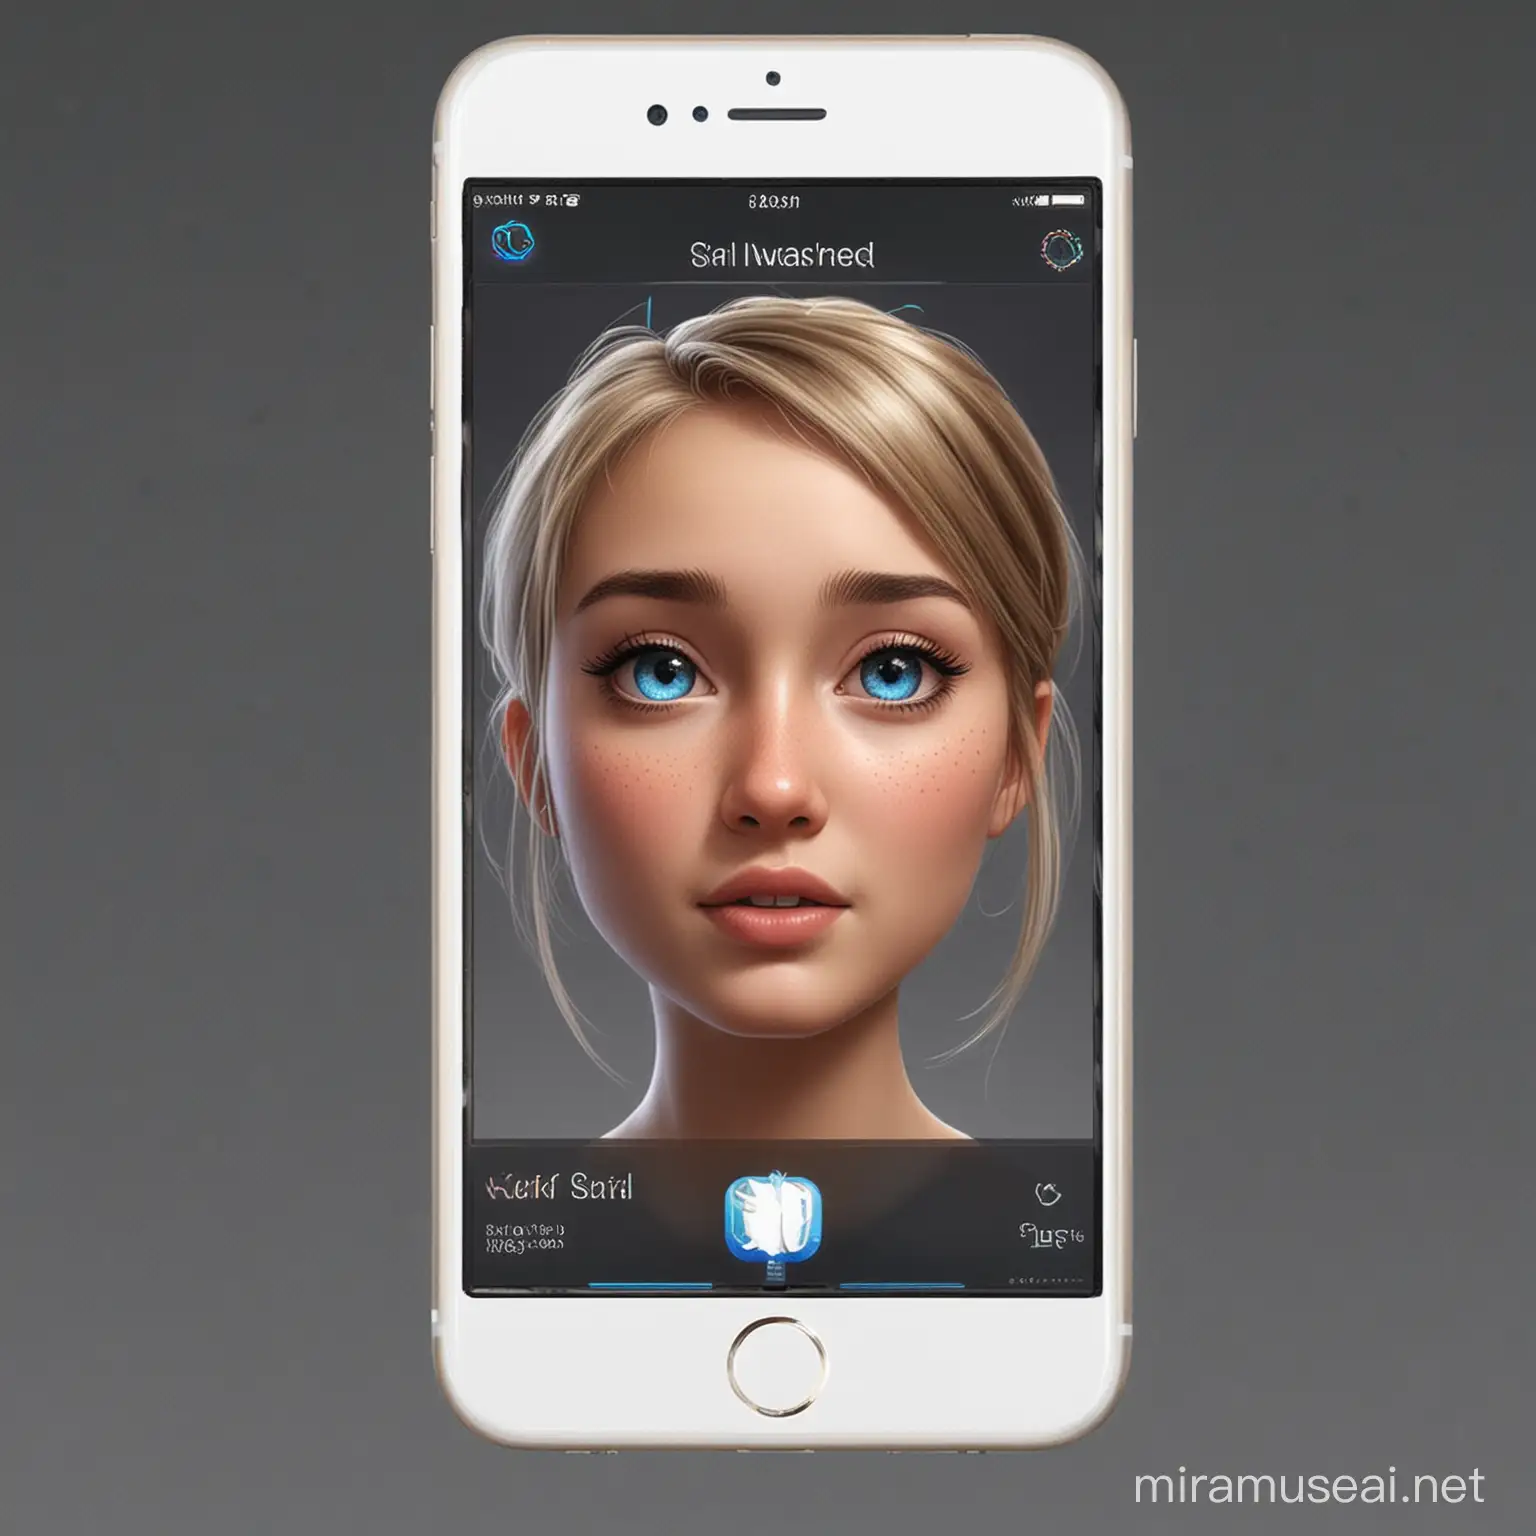 Colorful Fanloid XYDrick Siri Girl in iOS 9 Setting